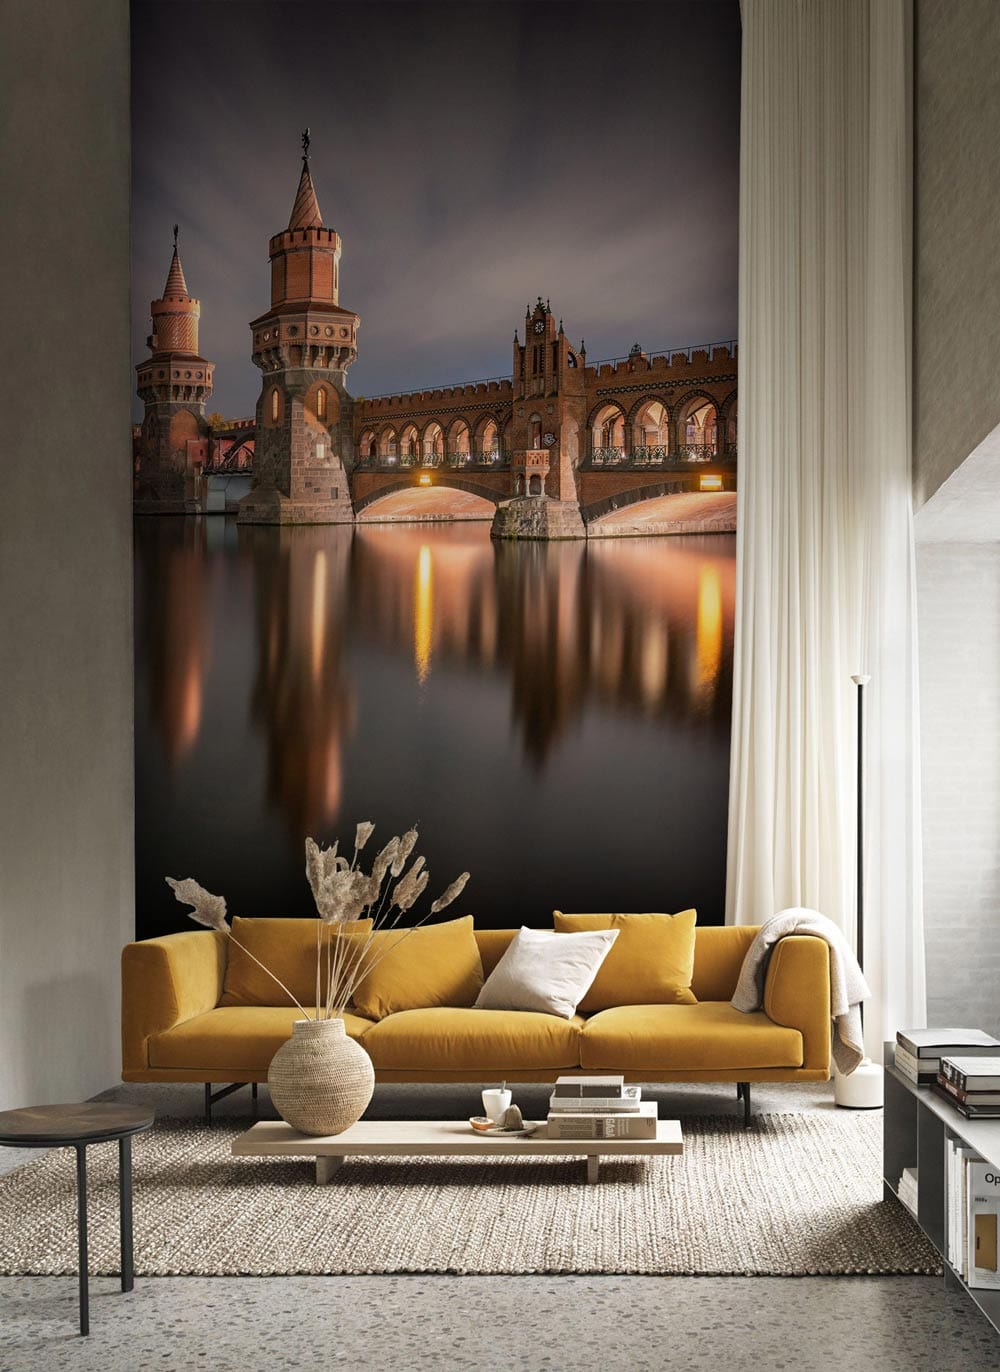 berlin bridge in a peaceful night wallpaper decoration living room